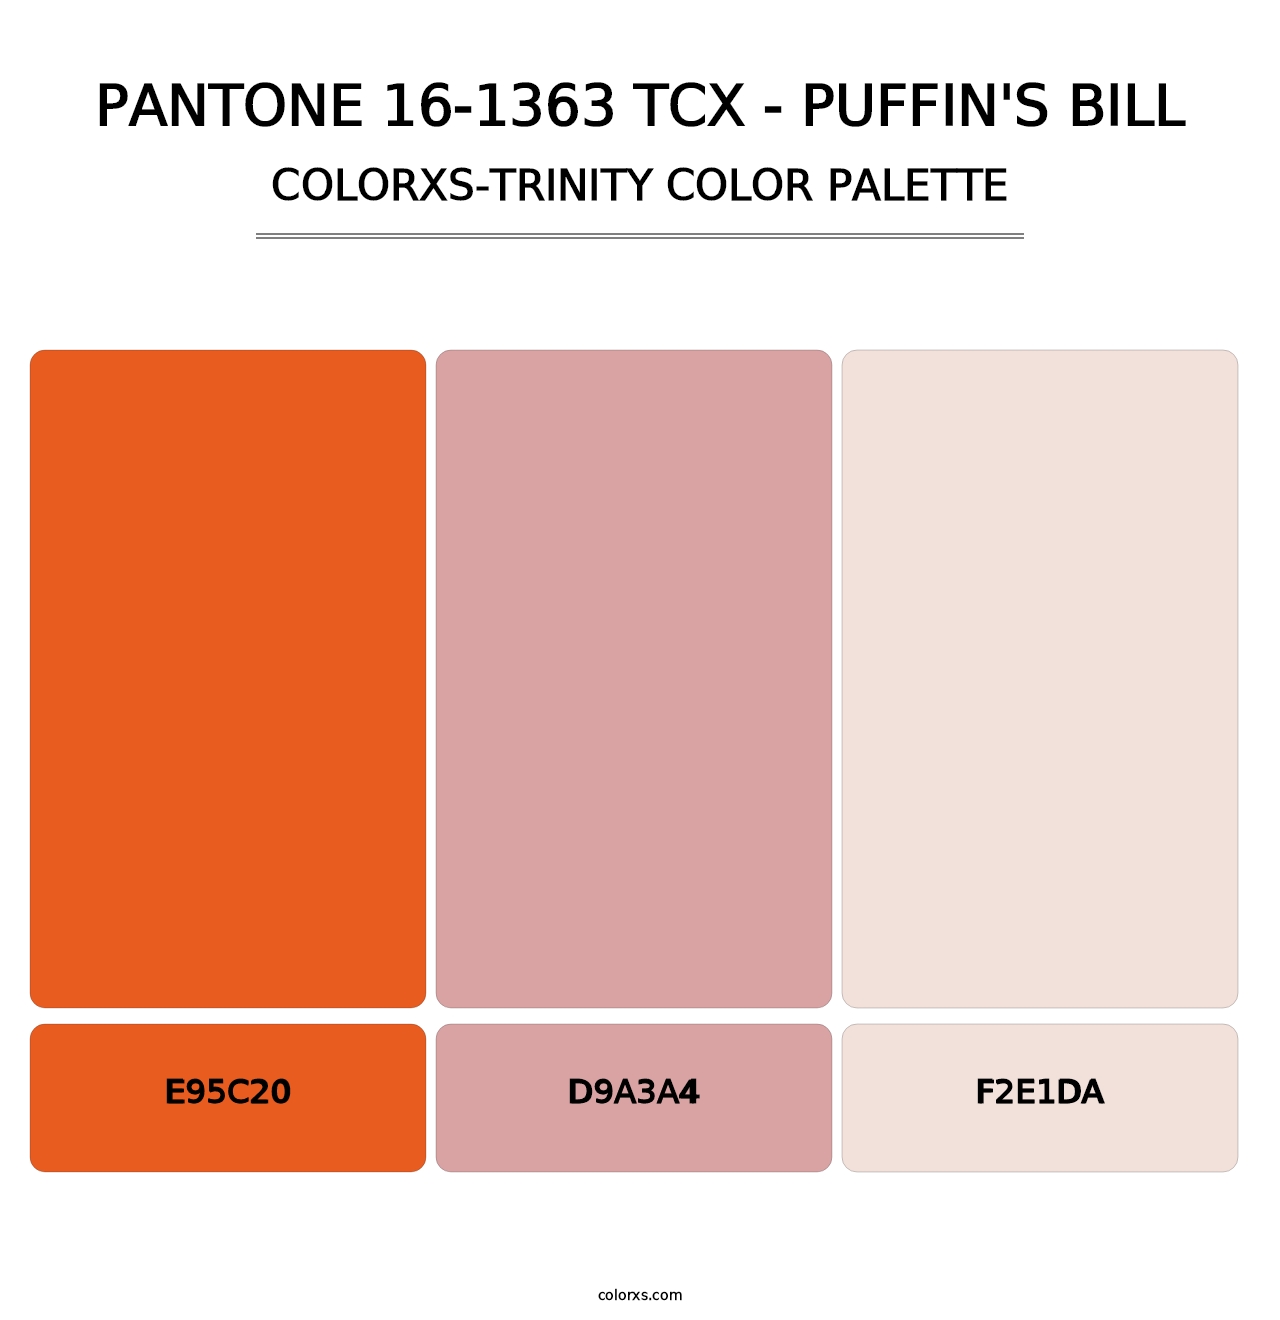 PANTONE 16-1363 TCX - Puffin's Bill - Colorxs Trinity Palette